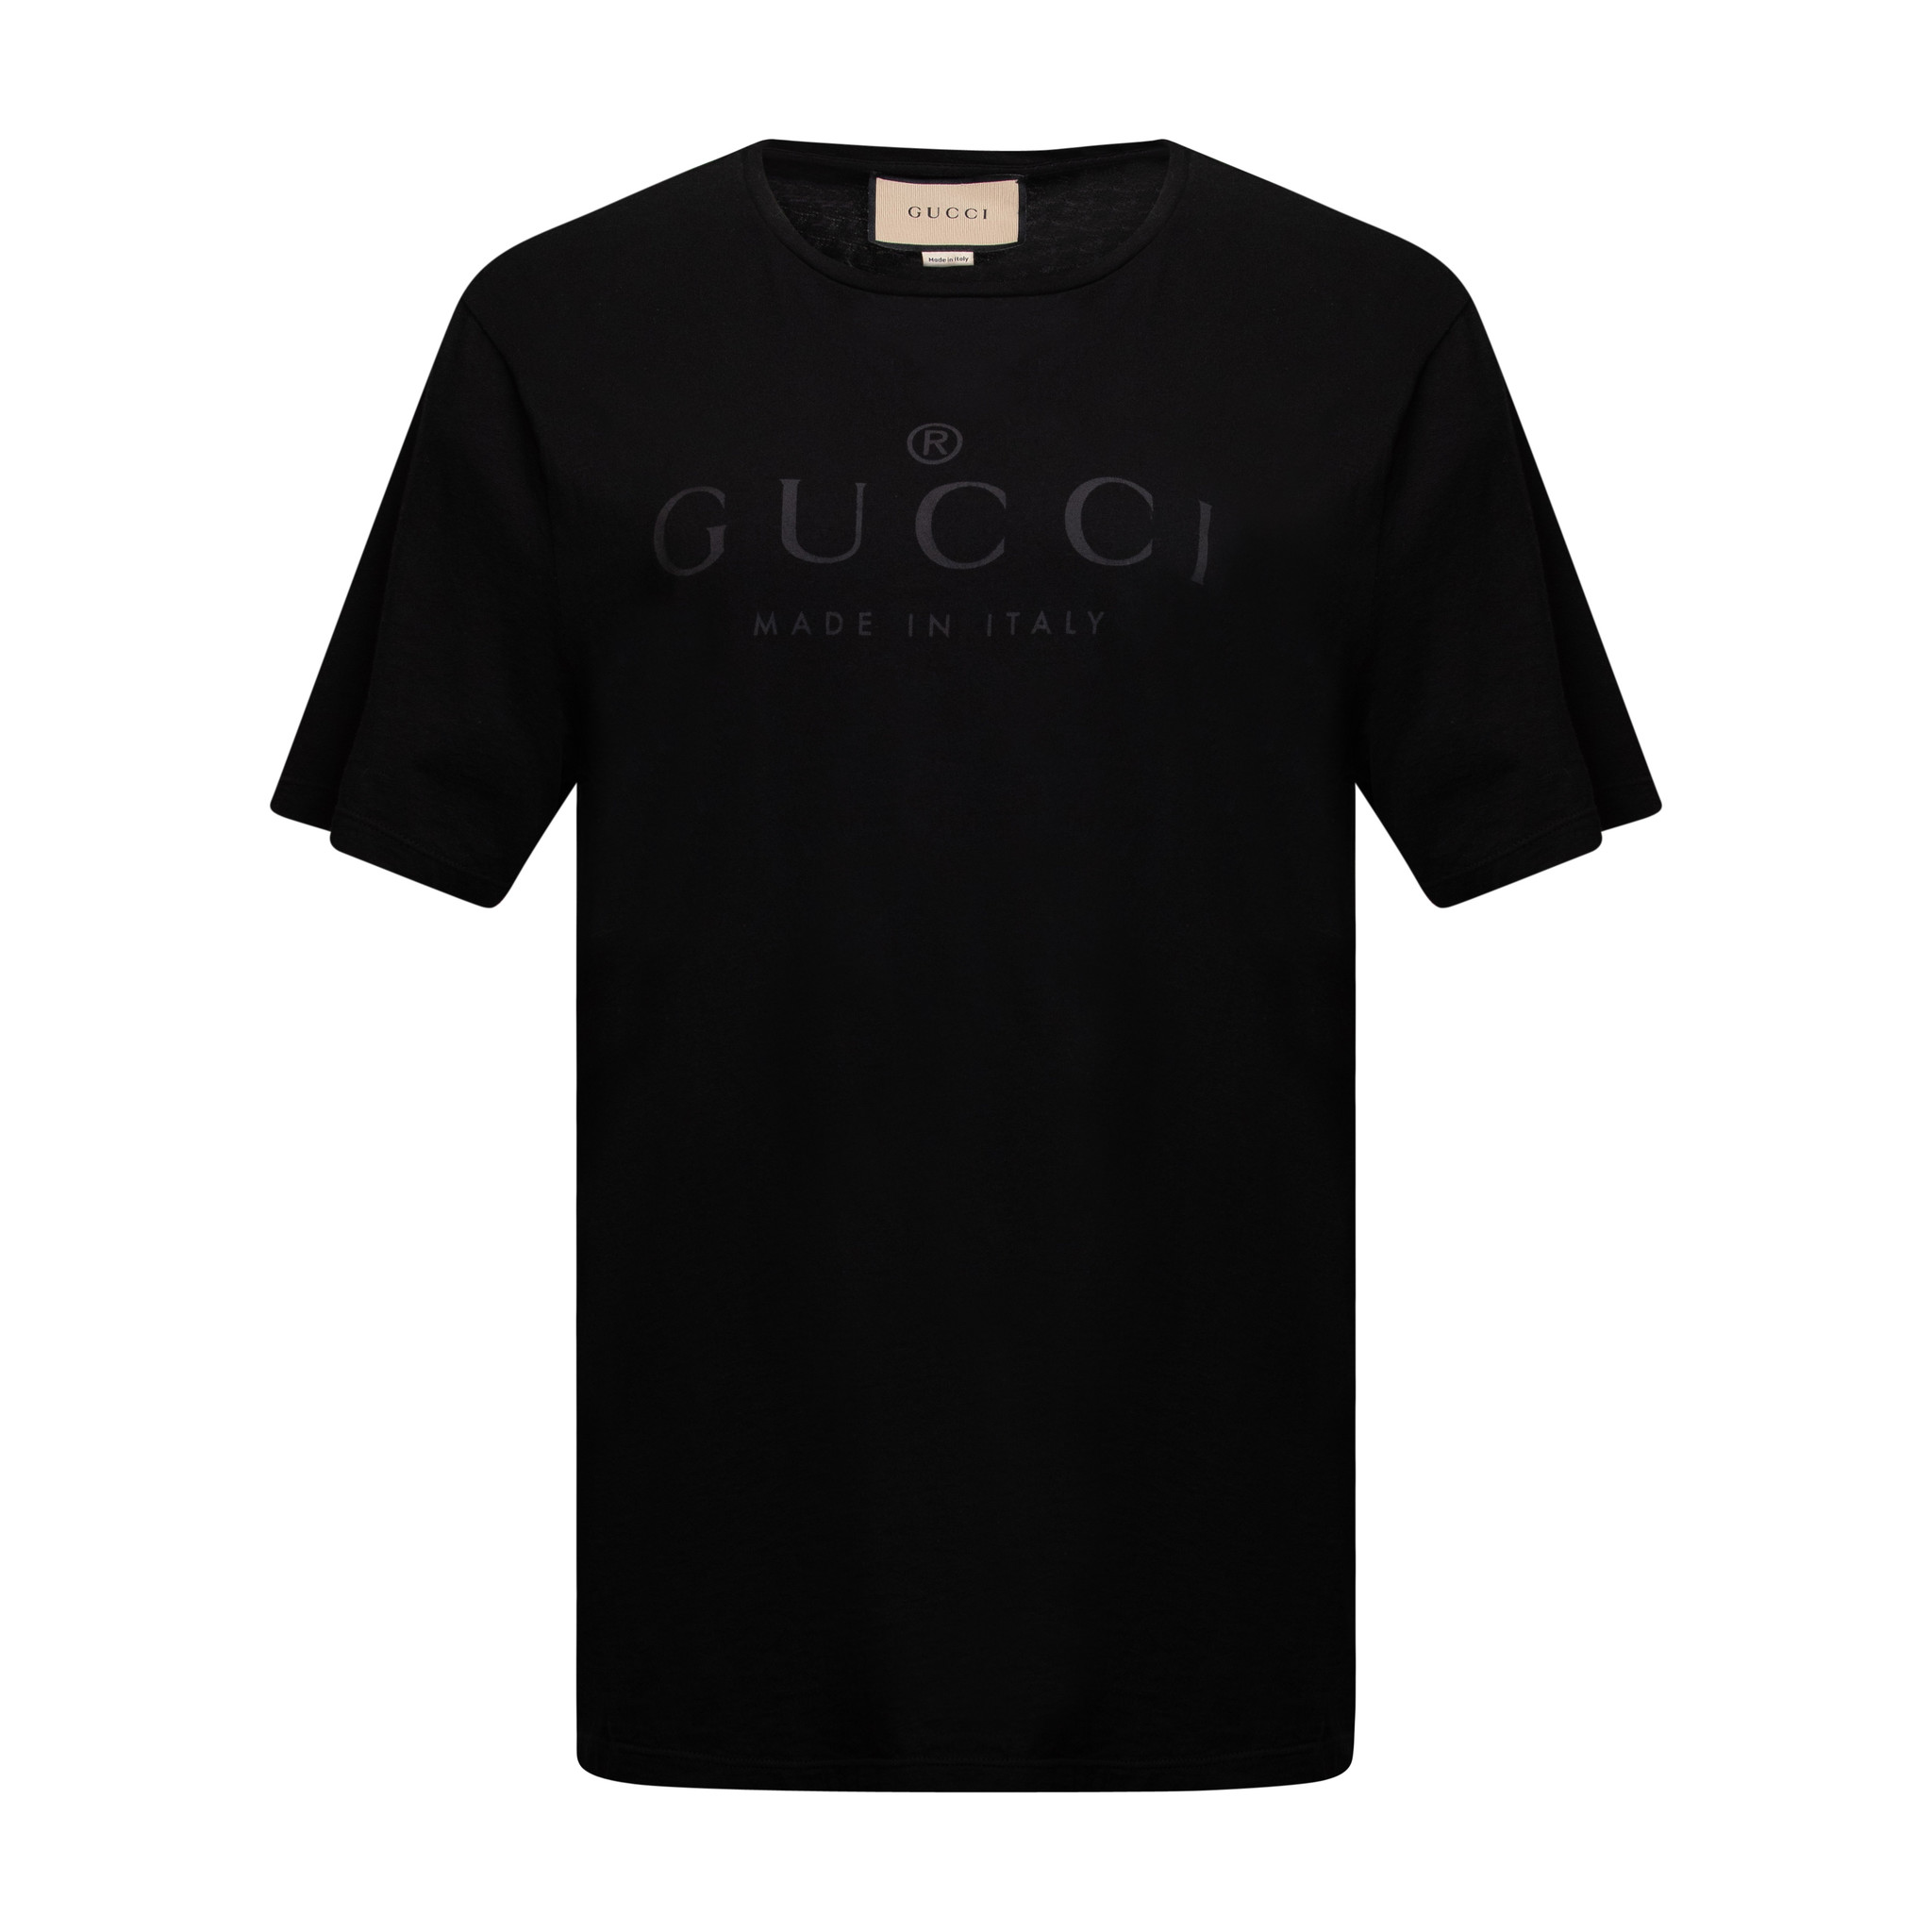 Gucci Mens T Shirt Black